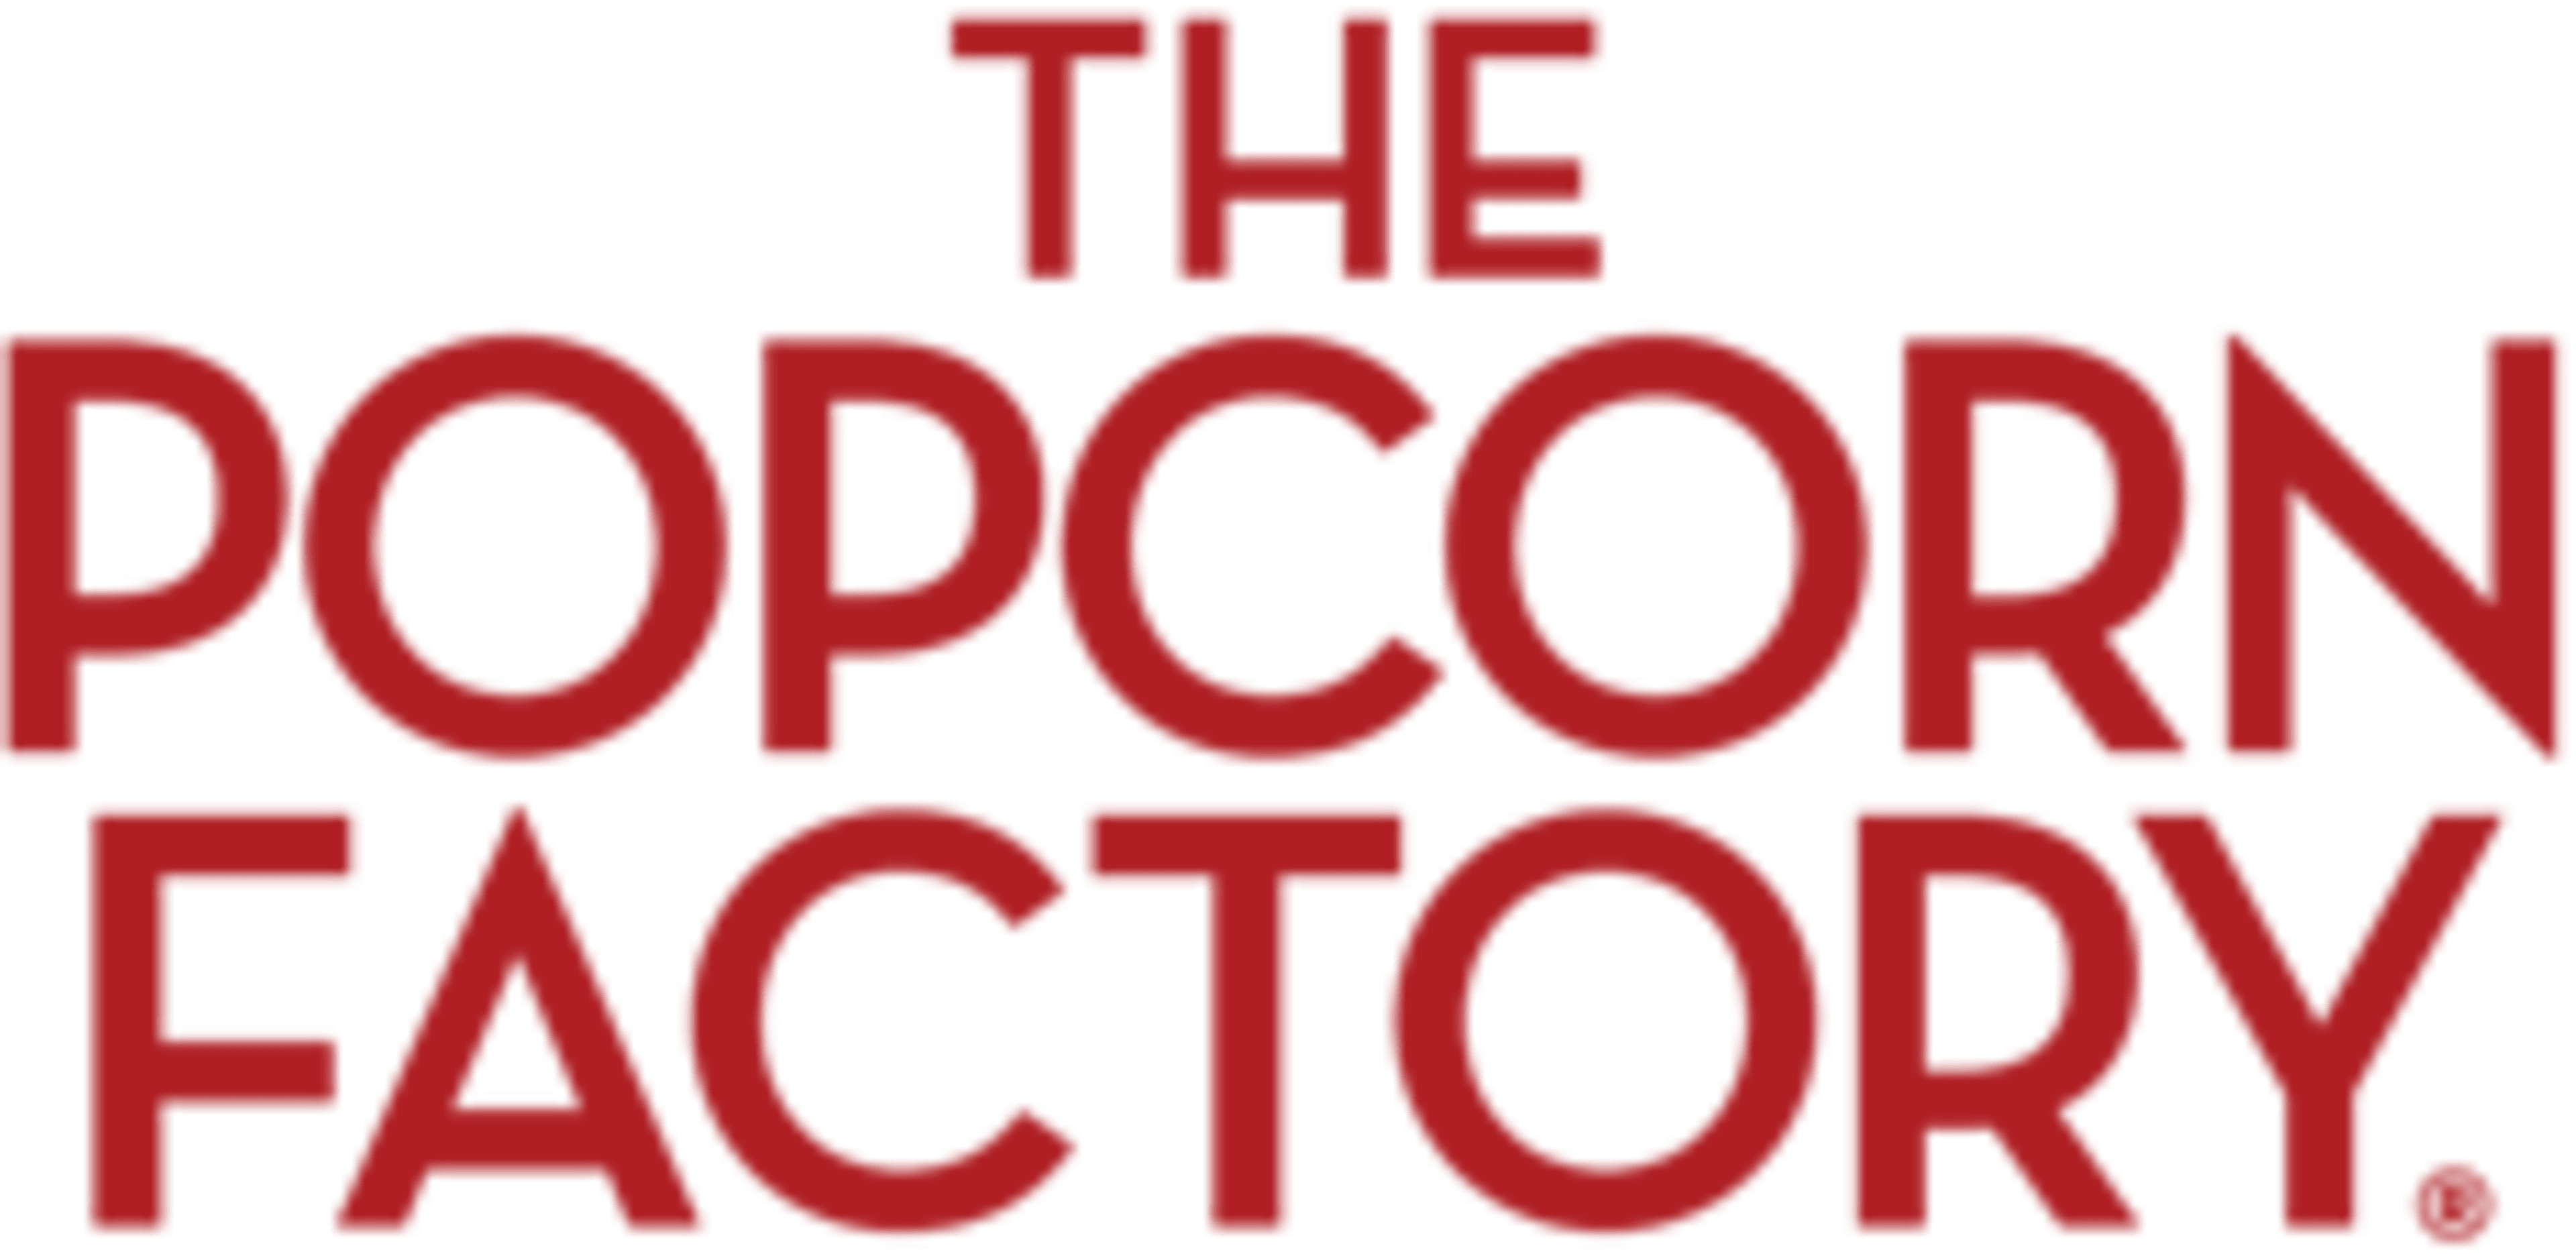 The Popcorn Factory Code